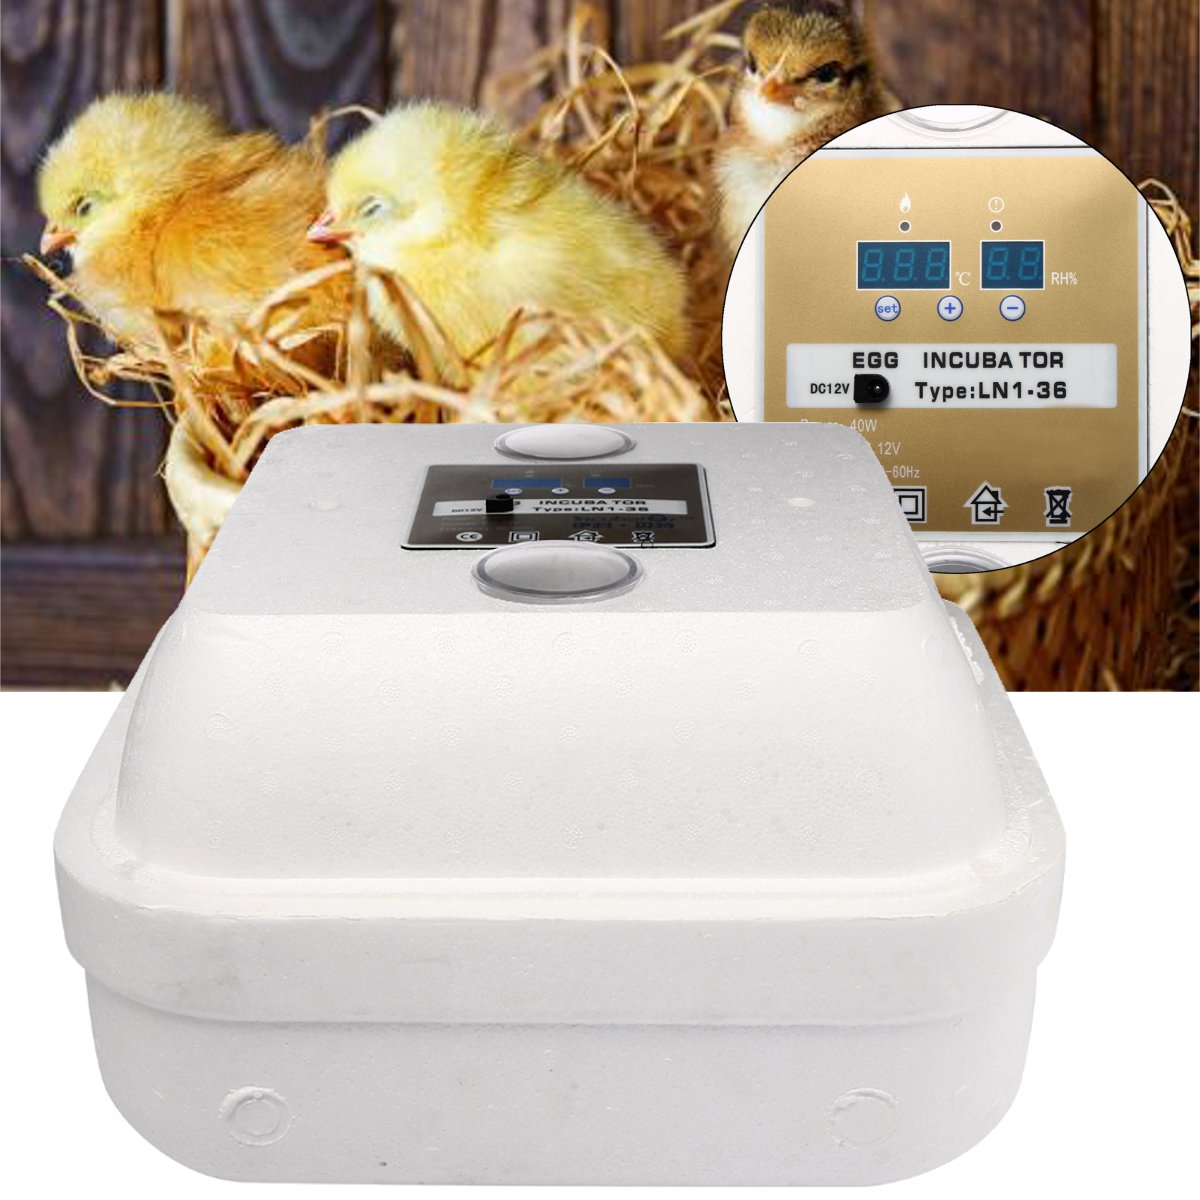 110V-220V-36-Eggs-Foam-Automatic-Family-Incubator-Digital-Chicken-Duck-Poultry-Hatcher-Tray-Egg-Incu-1275381-1